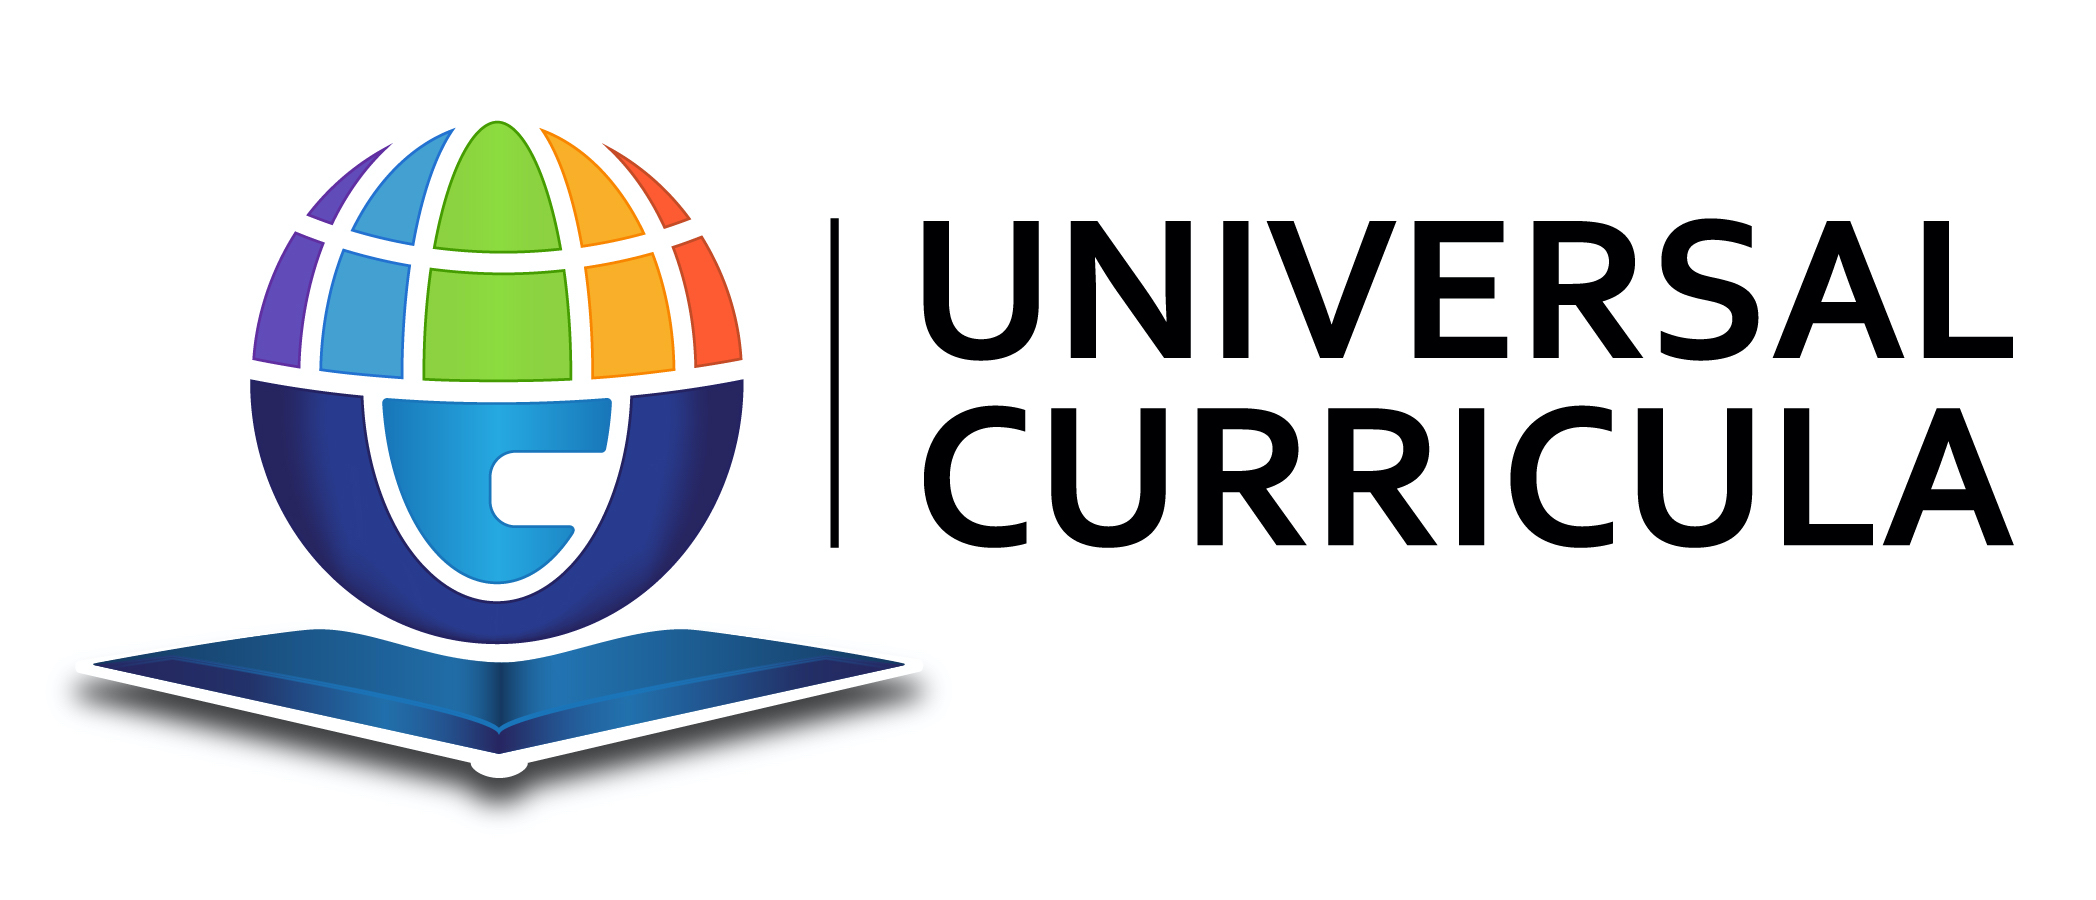 Universal Curricula logo